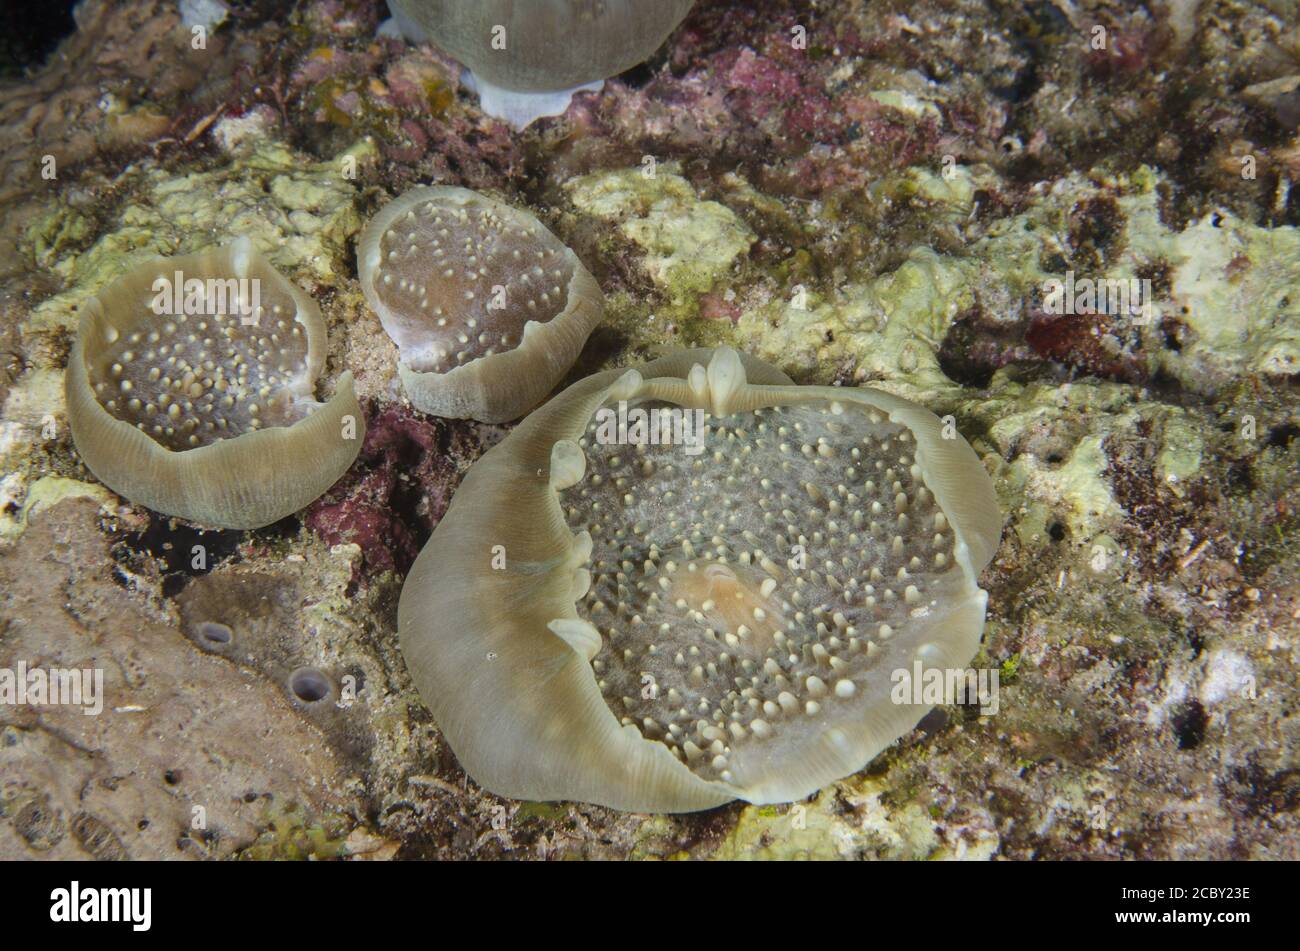 Corallienne aux champignons, Amplexidiscus fenestrafer, Discosomidae, Anilao, Batangas, Philippines, Indo-océan pacifique, Asie Banque D'Images